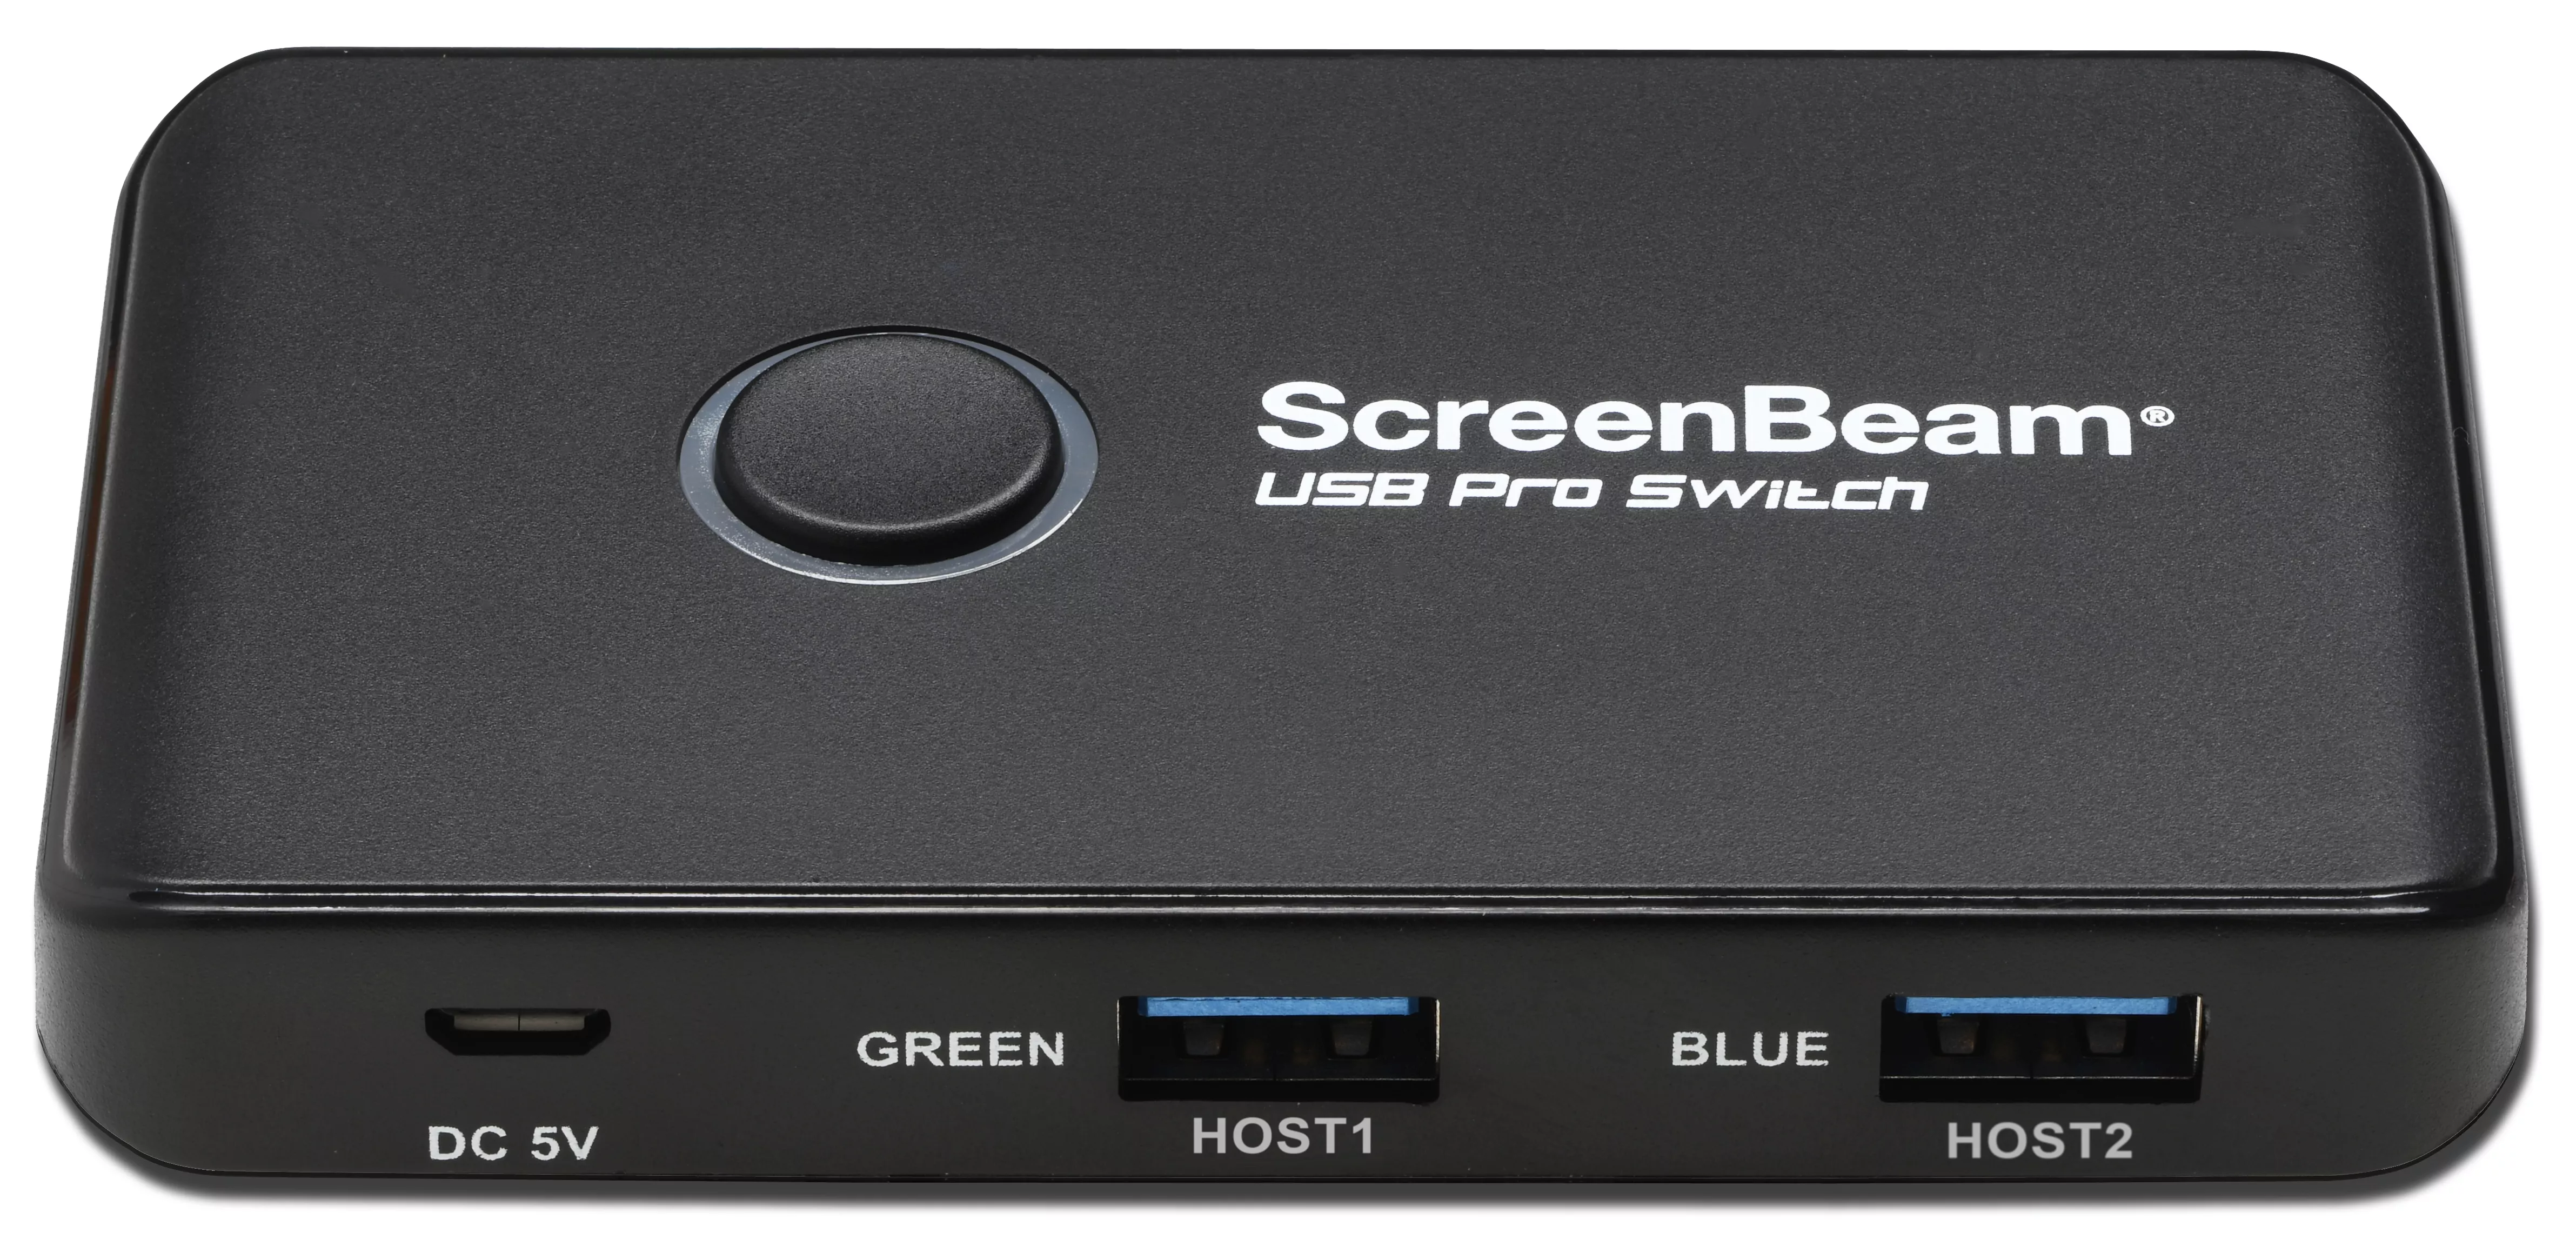 Achat ScreenBeam USB Pro Switch au meilleur prix